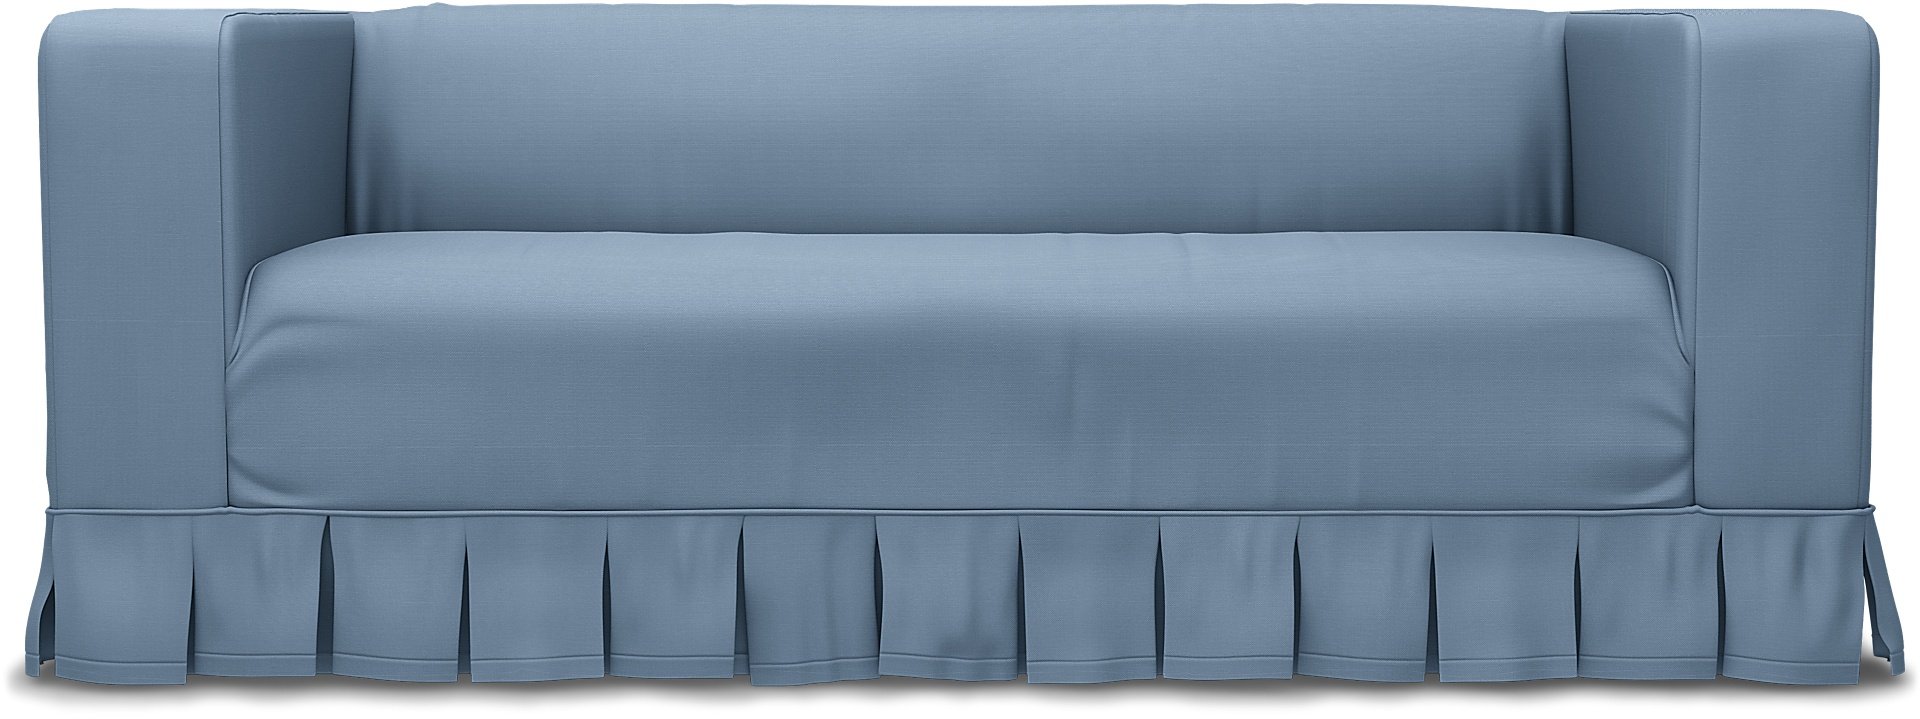 IKEA - Klippan 2 Seater Sofa Cover, Dusty Blue, Cotton - Bemz